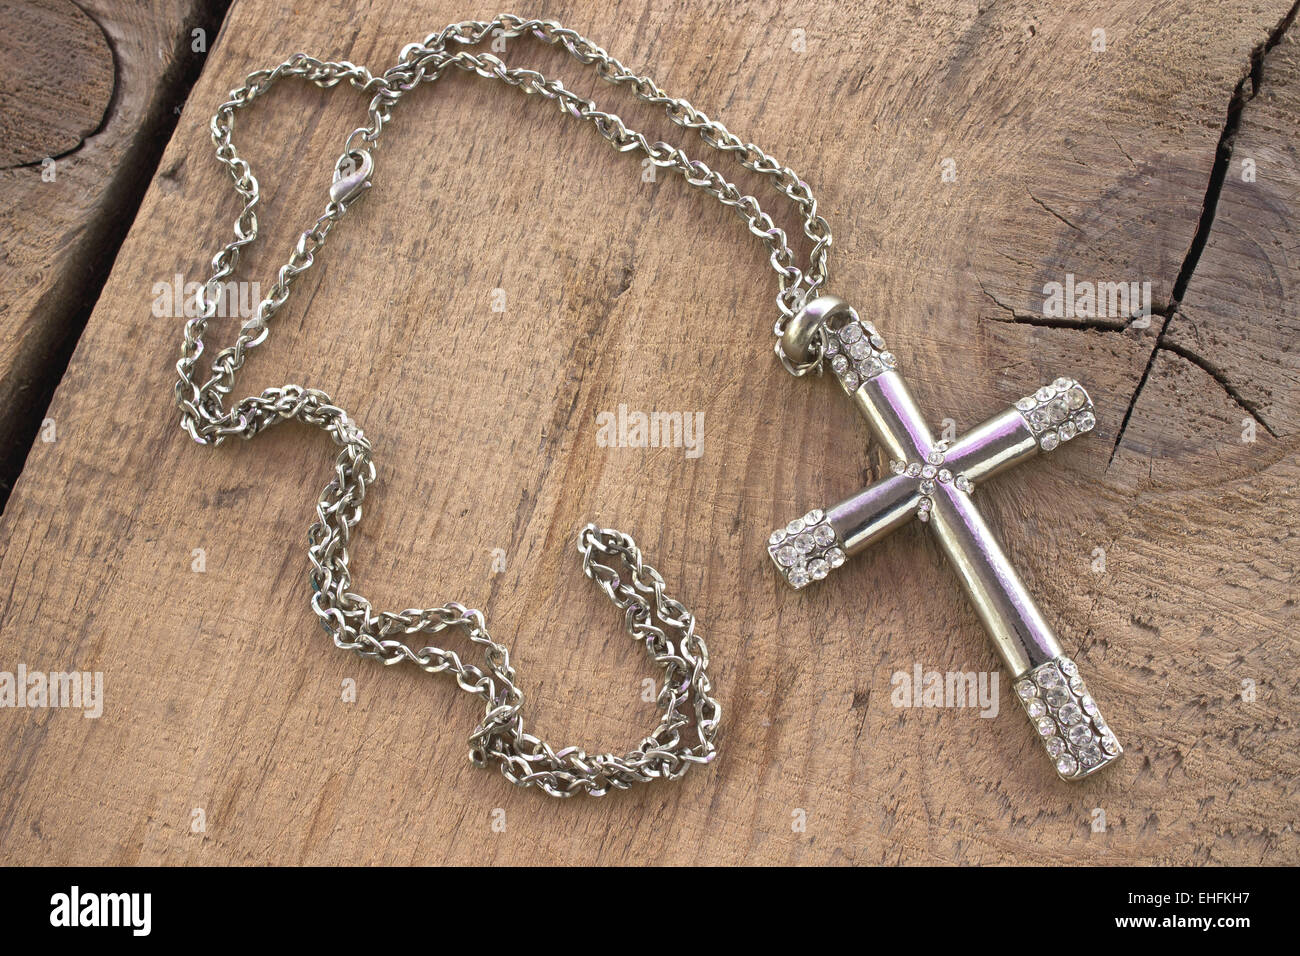 Silver chain necklace with cross pendant -Fotos und -Bildmaterial in hoher  Auflösung – Alamy